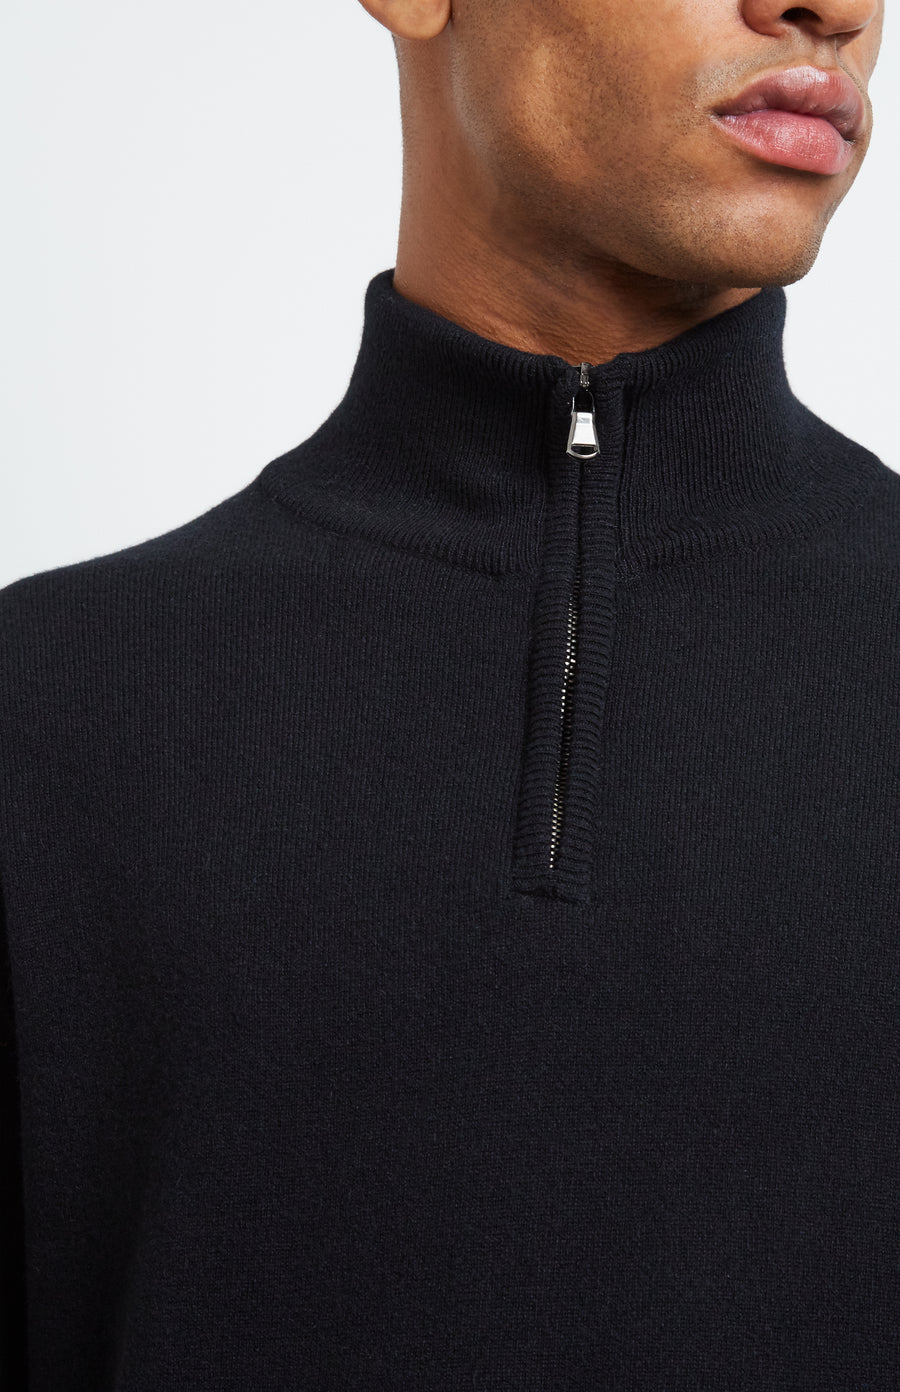 Men's Black Cashmere Zip Neck Jumper Details - Pringle of Scotland